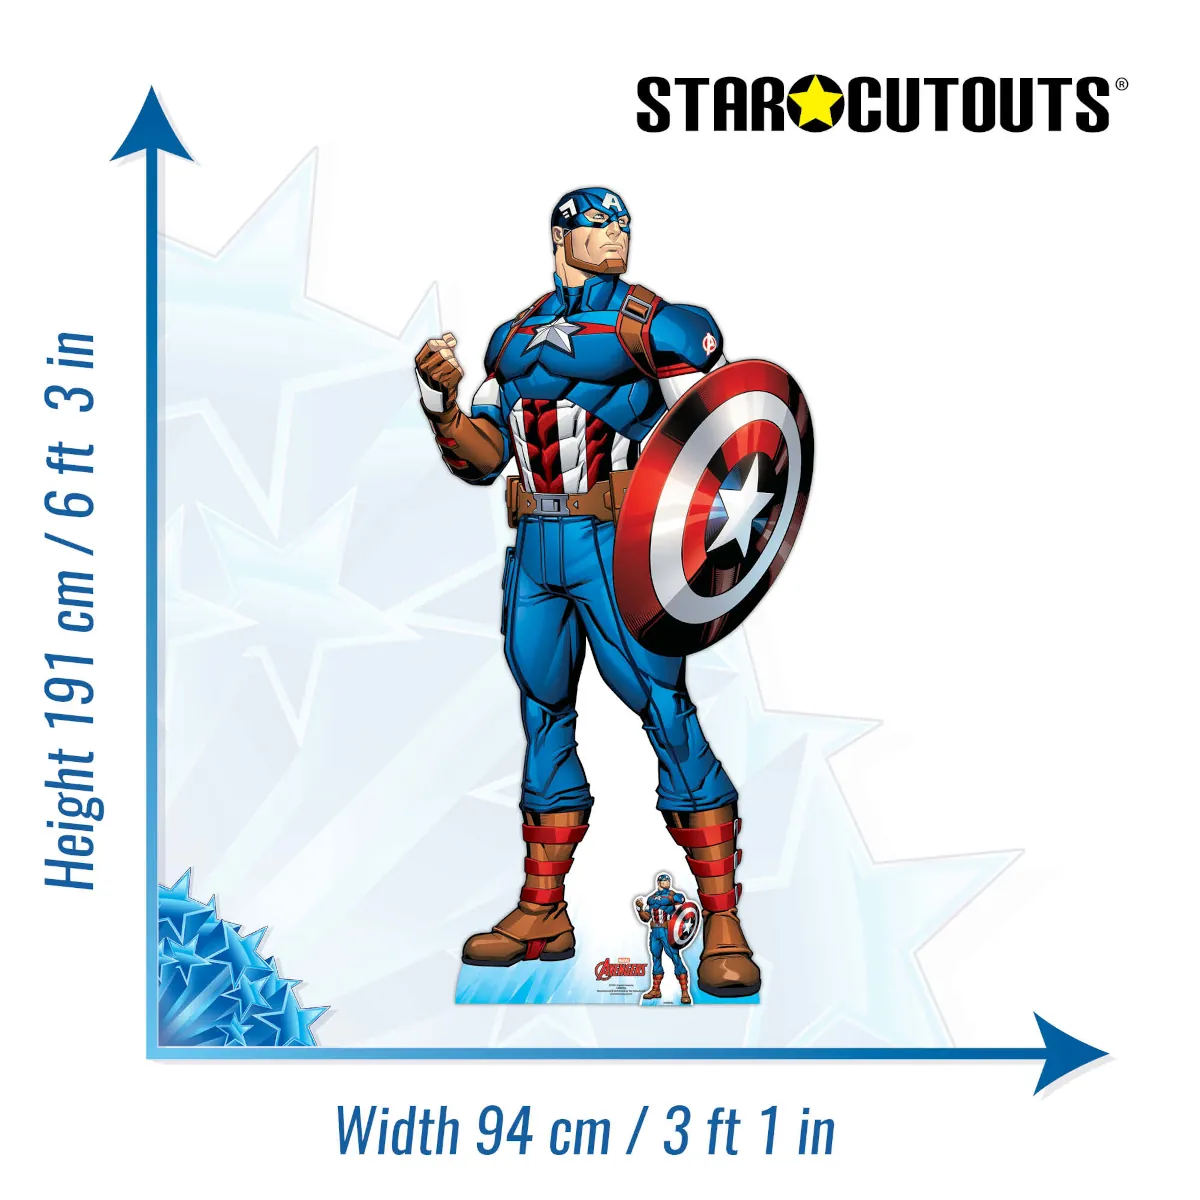 Captain America 'Superhero' (Marvel Avengers) Lifesize + Mini Cardboard Cutout Size